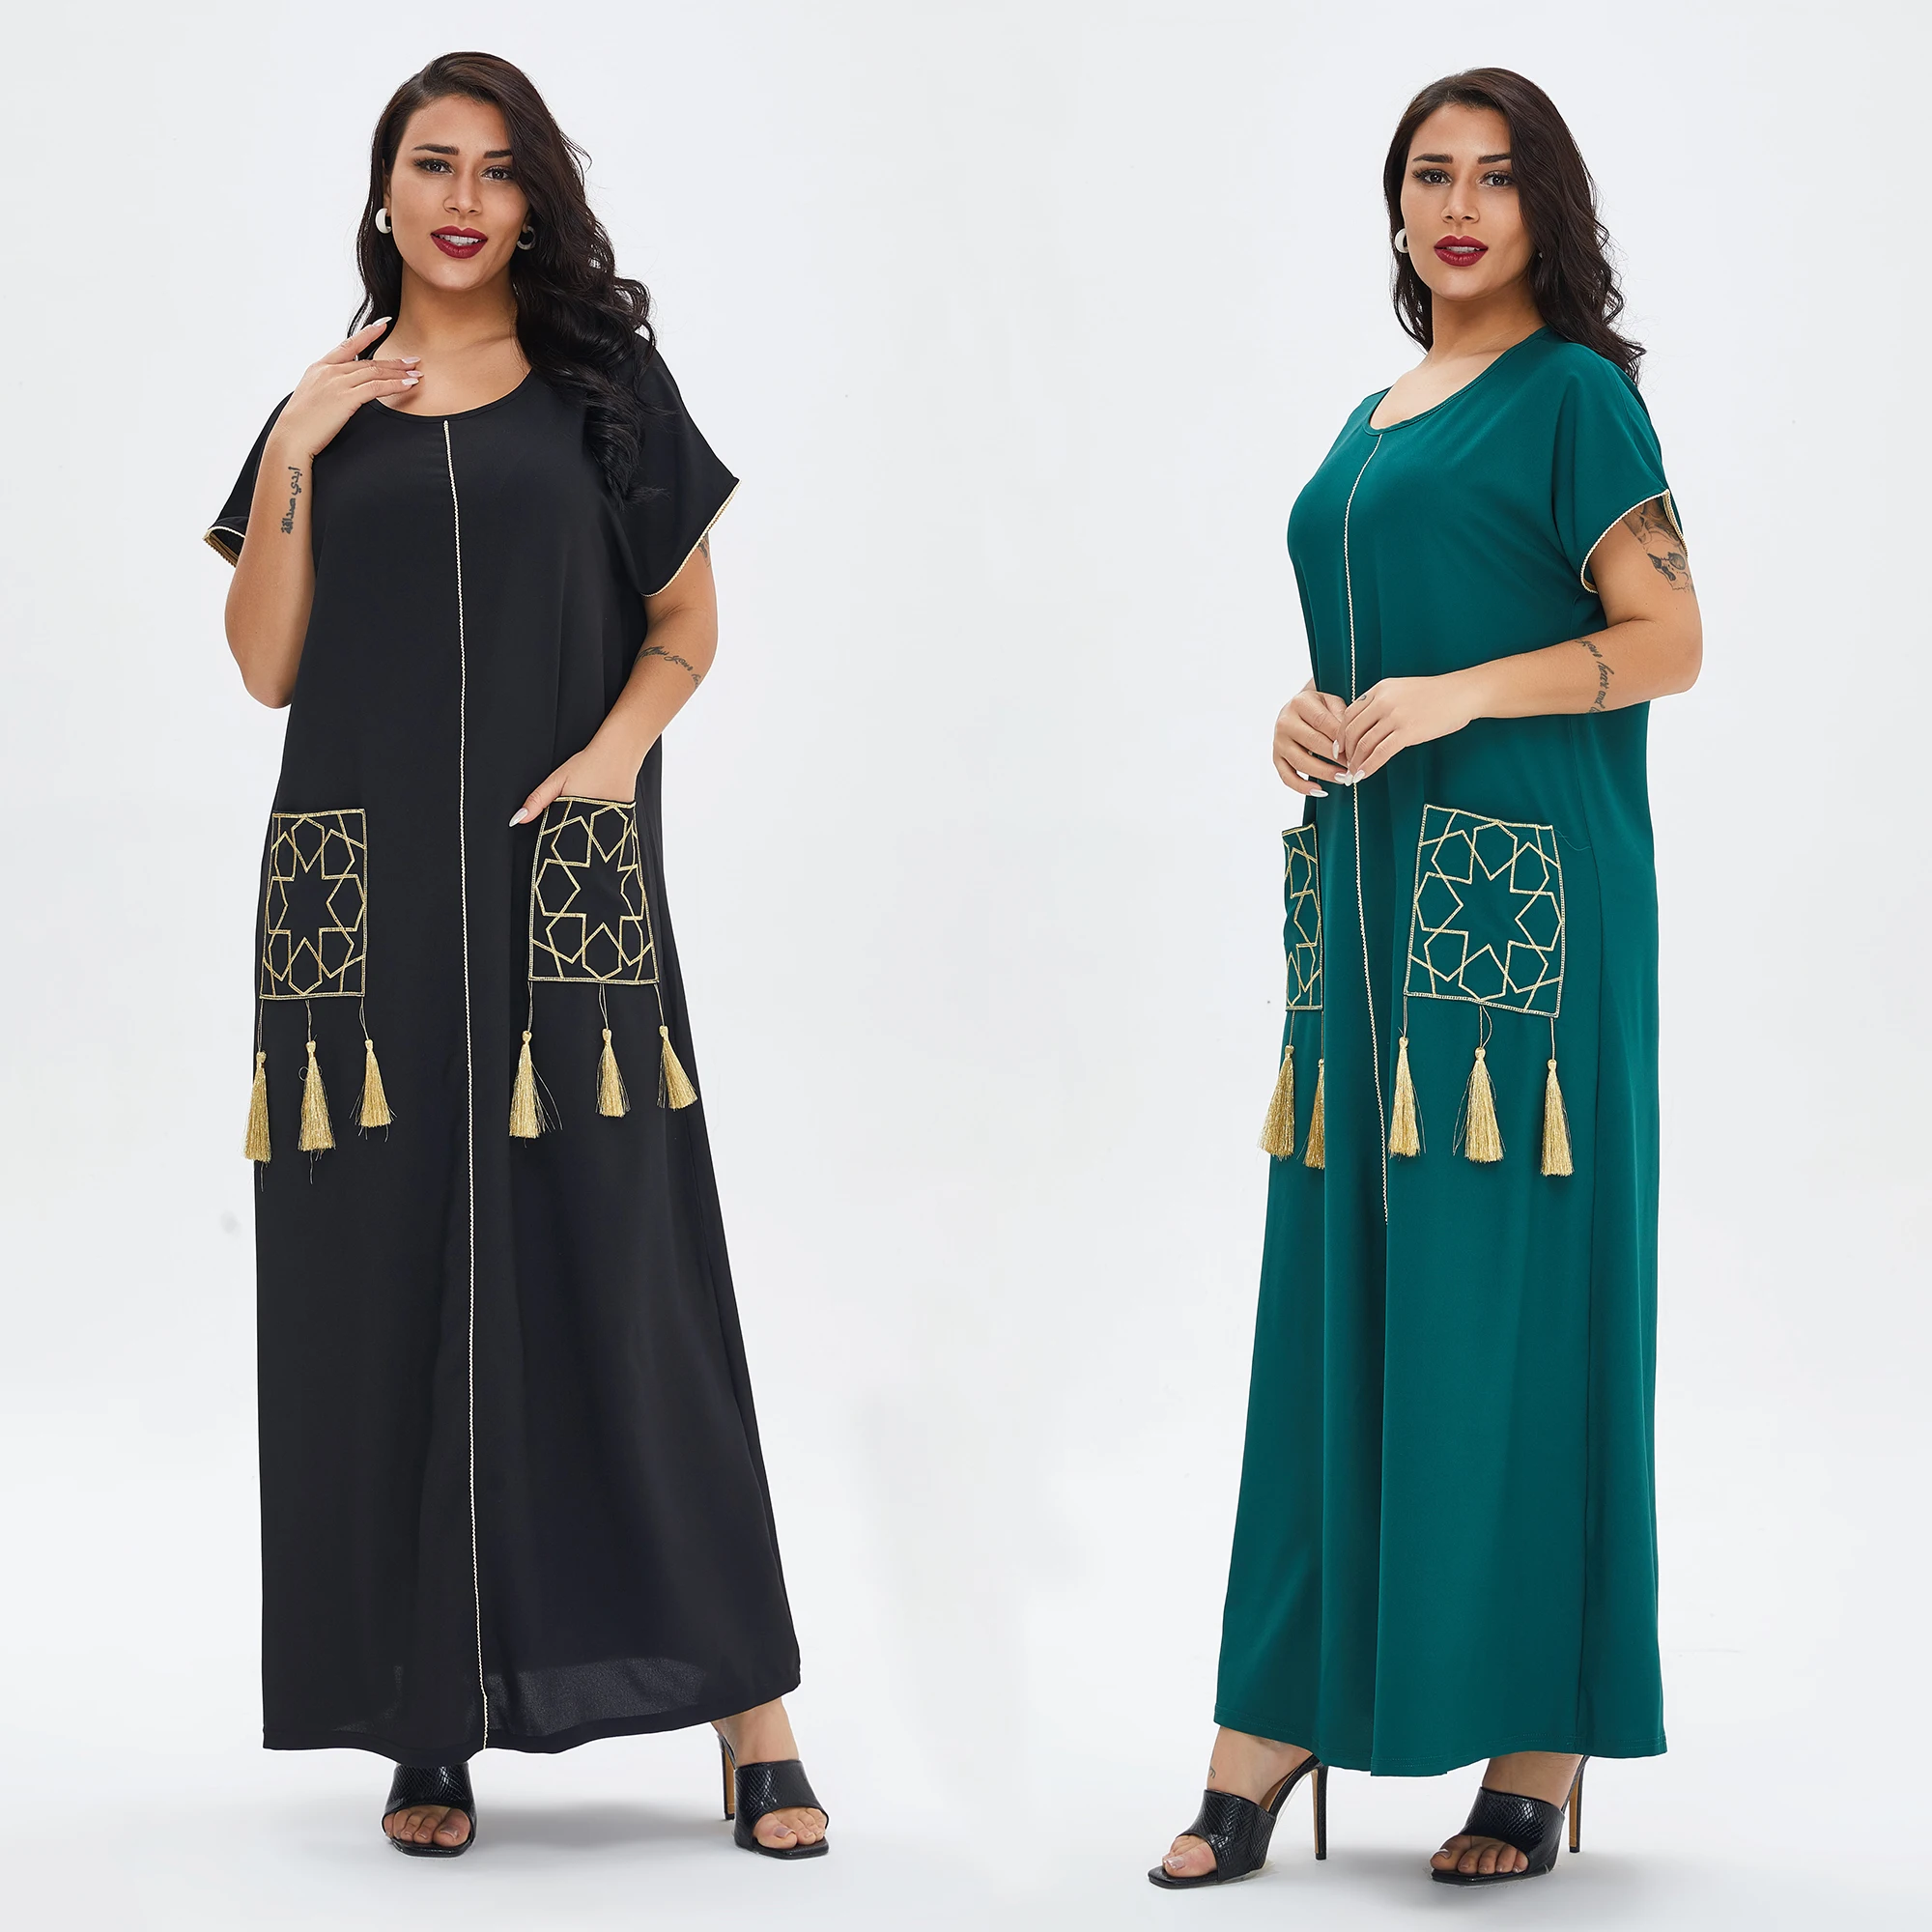 

Arab Gown Women's Sleepwear Pajamas Robe Home Night Dresses for Women muslim dress maxi kaftan caftan islam islamic clothing, Picture color